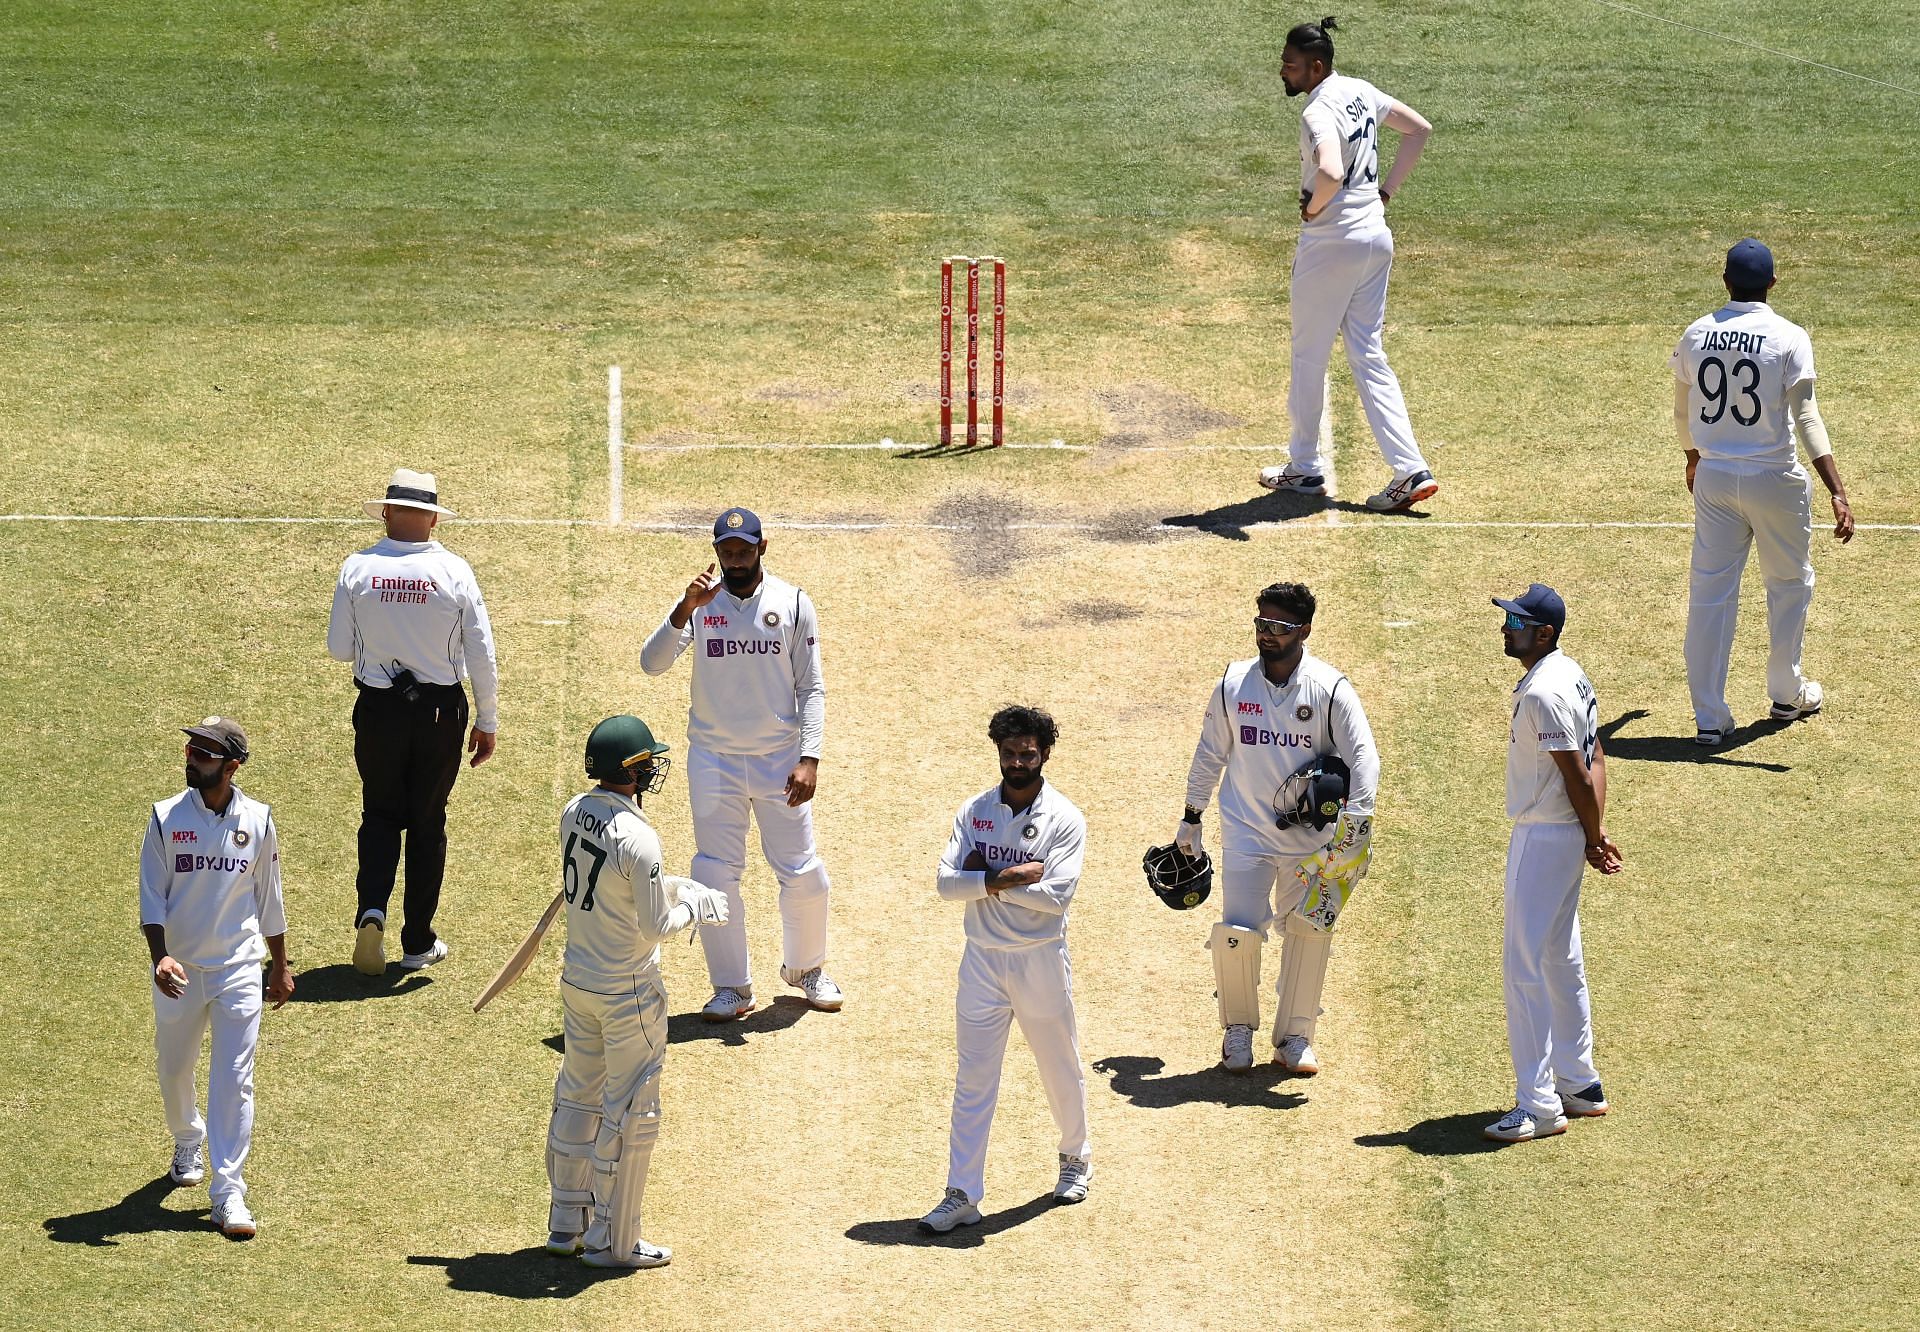 Australia v India: 2nd Test - Day 4 (Image: Getty)